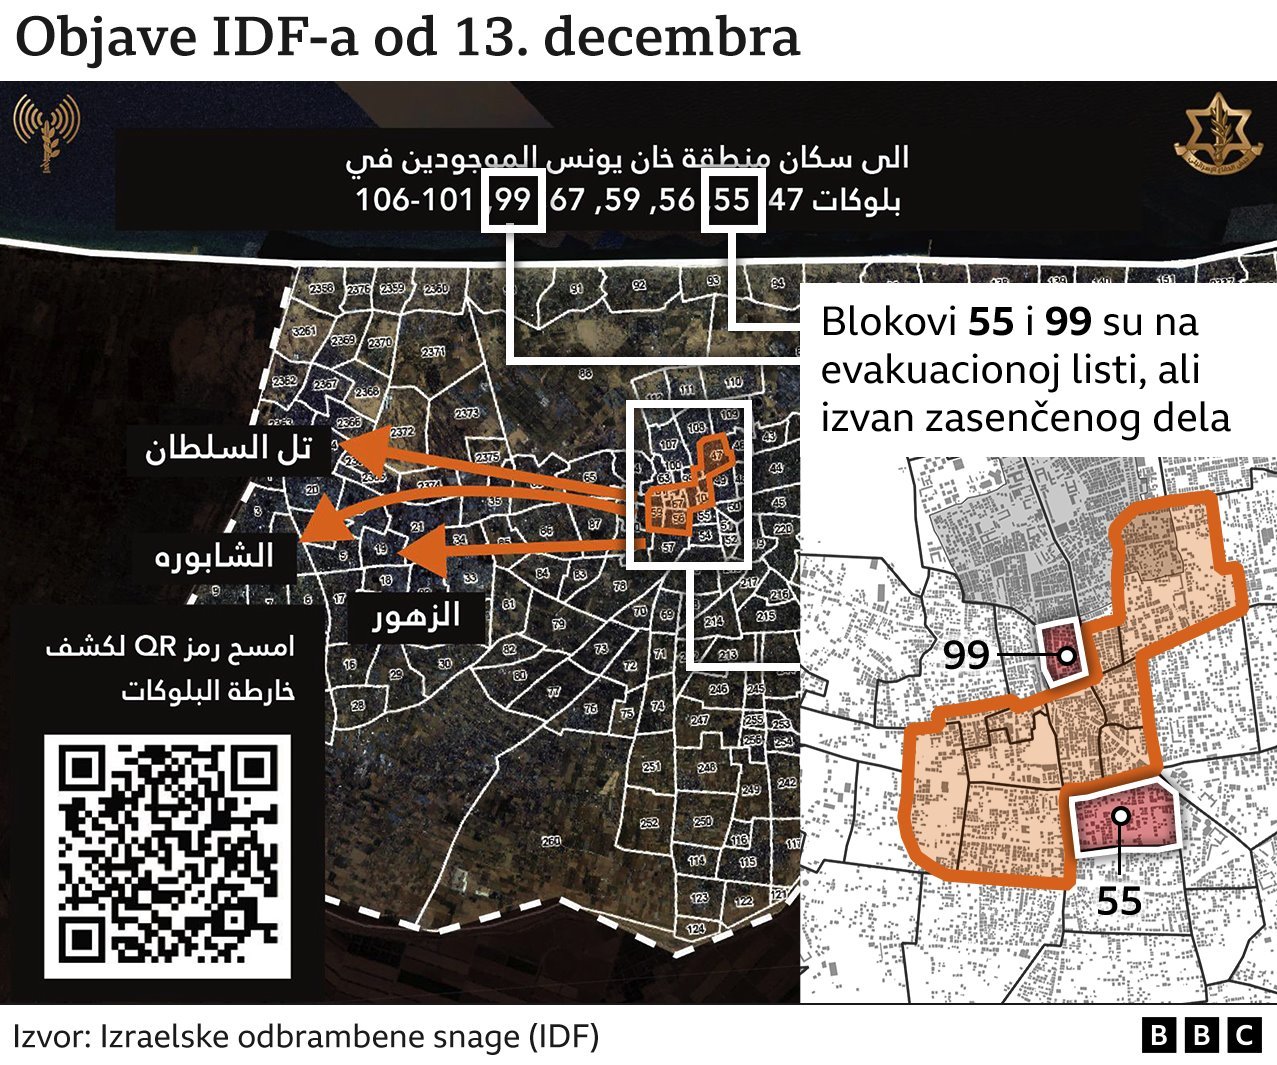 Objava IDF-a od 13. decembra